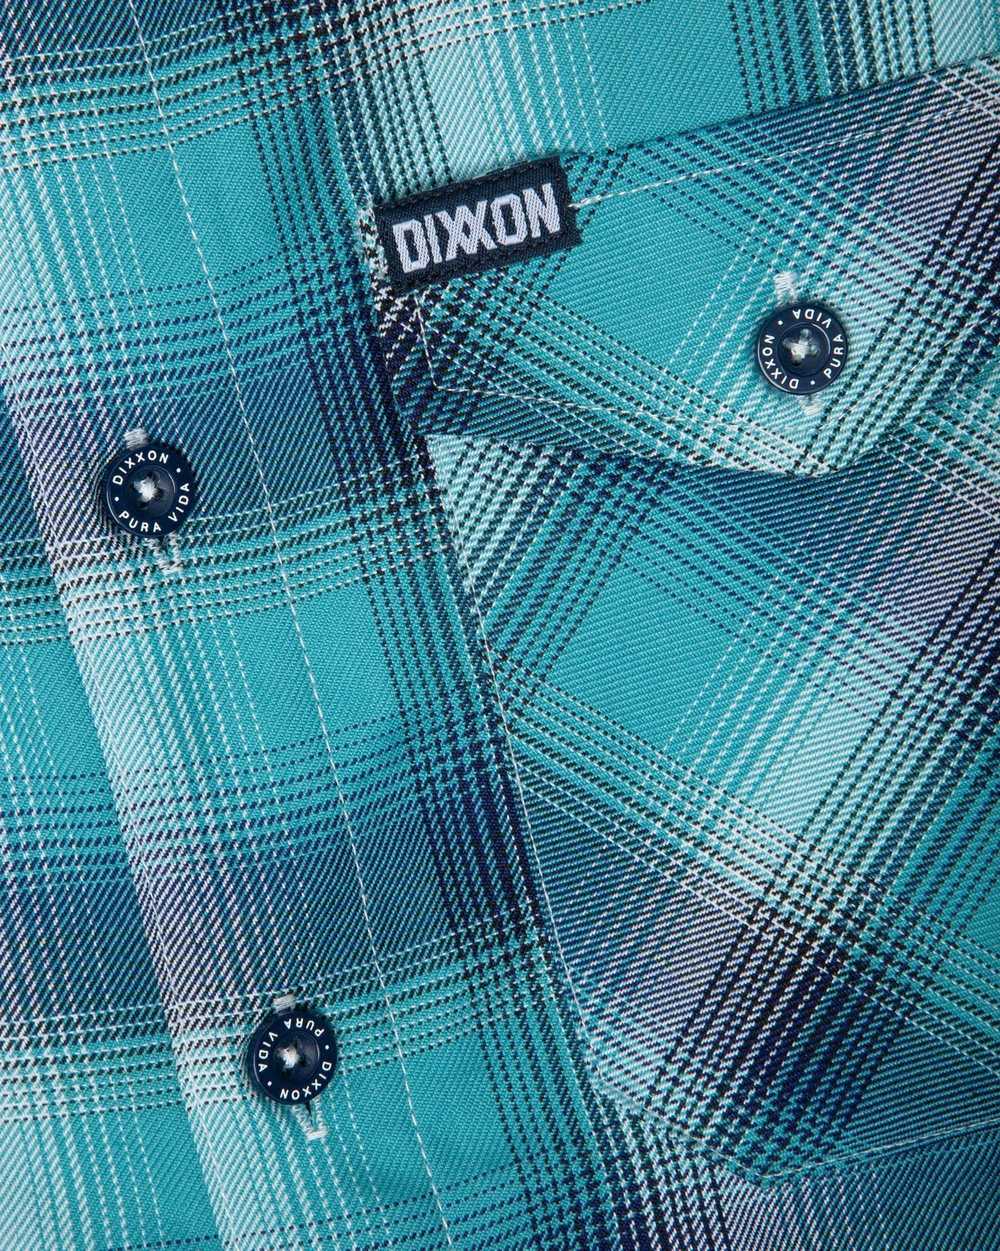 dixxon Blue Marlin Flannel - image 2